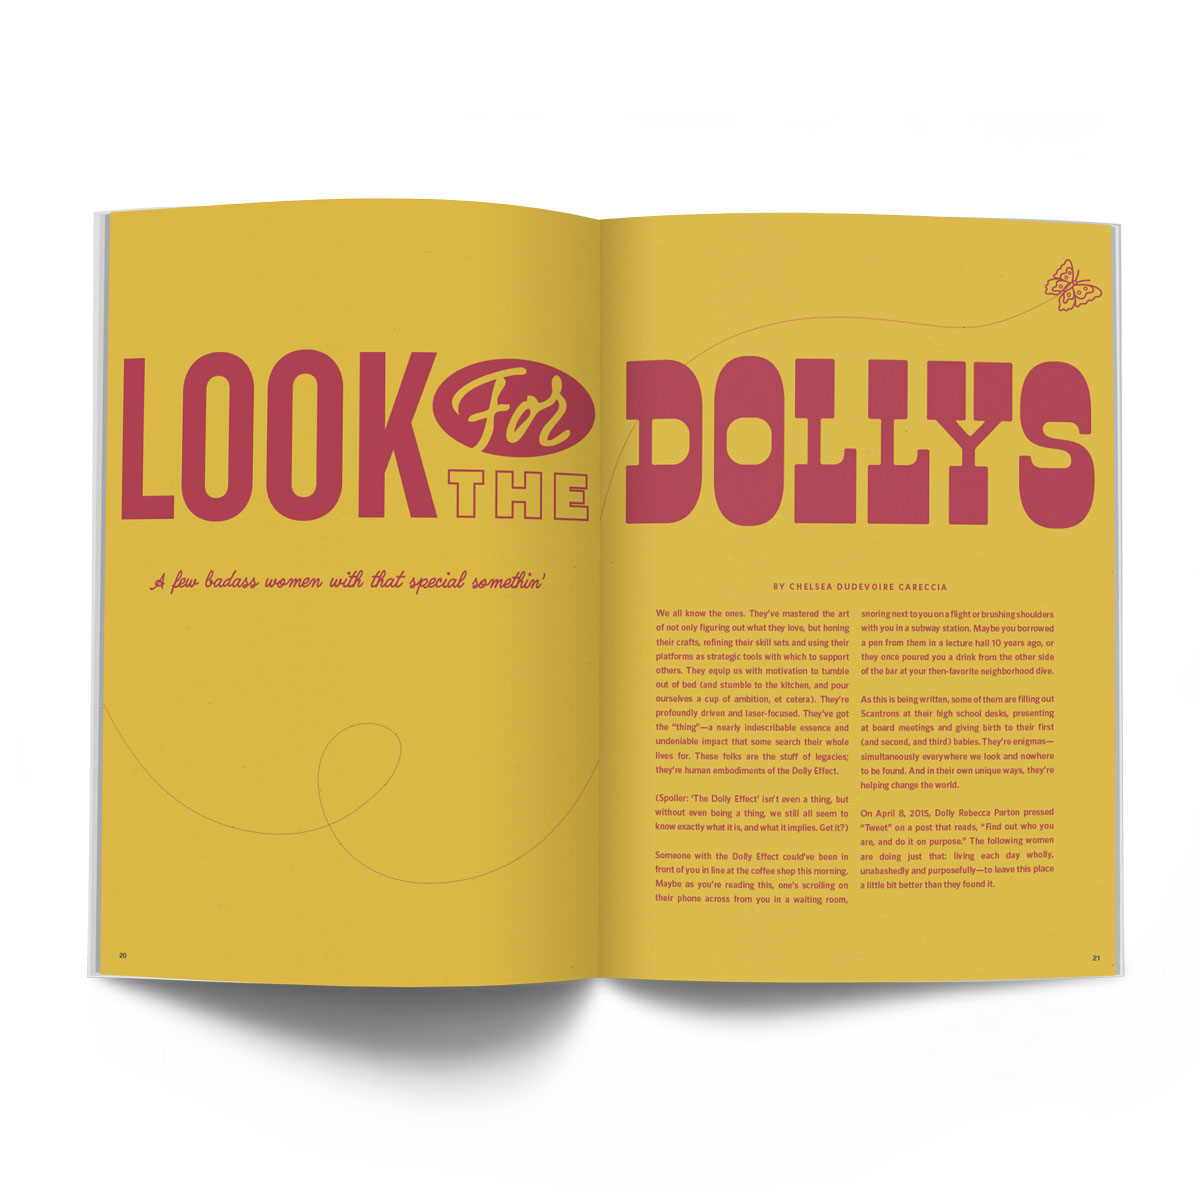 dolly-magazine-mockup-2